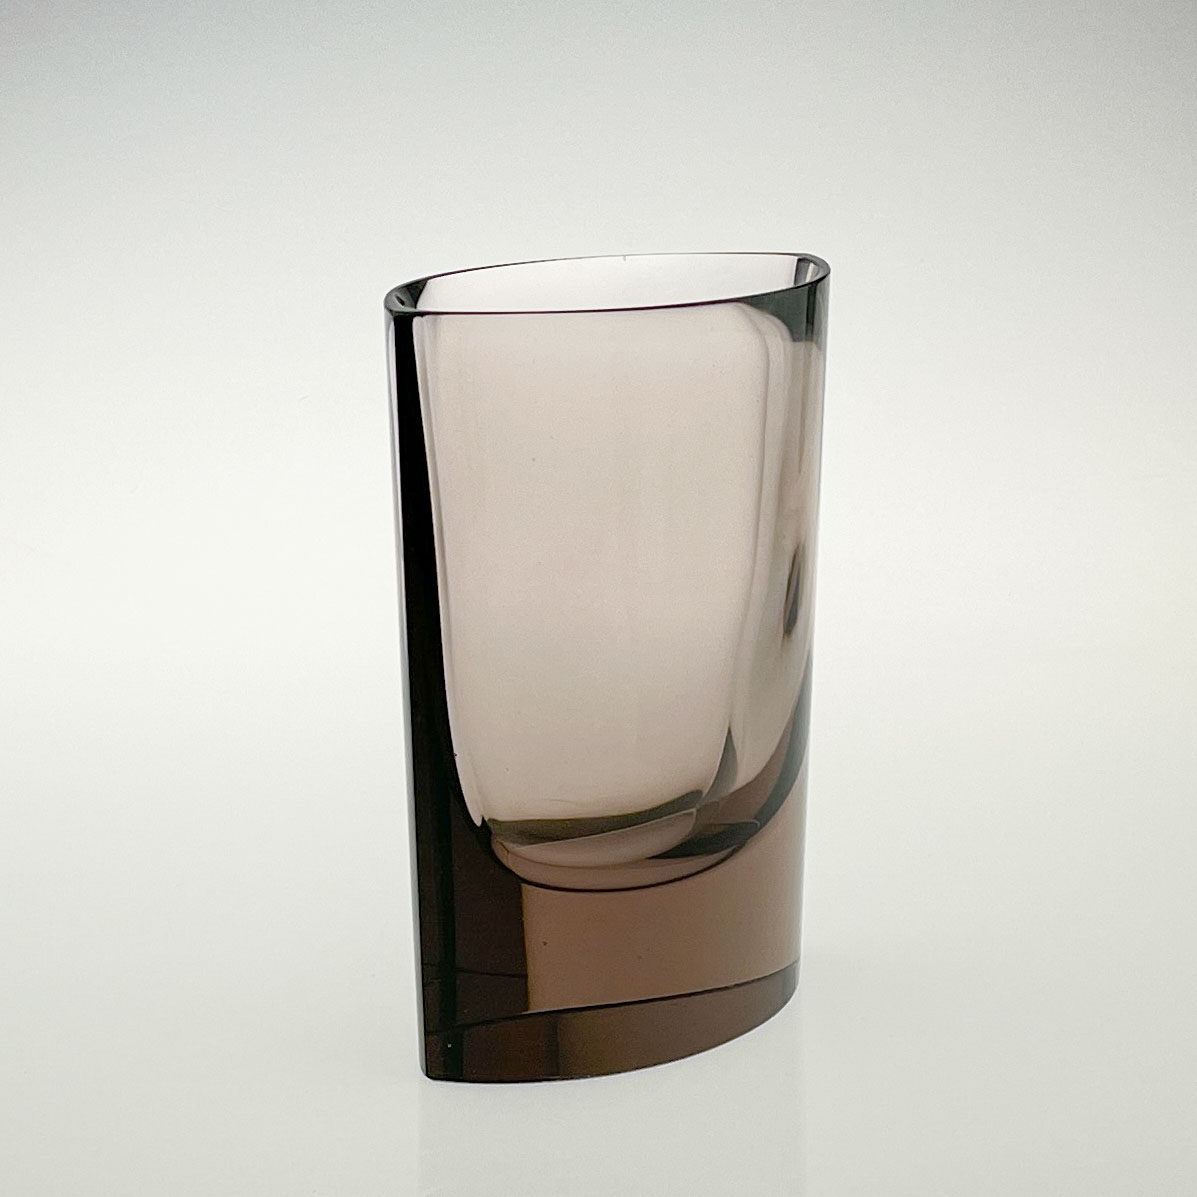 Kaj Franck - Scandinavian Modern pink art glass object / vase, model N407 - Nuutajärvi-Notsjö Finland, 1967